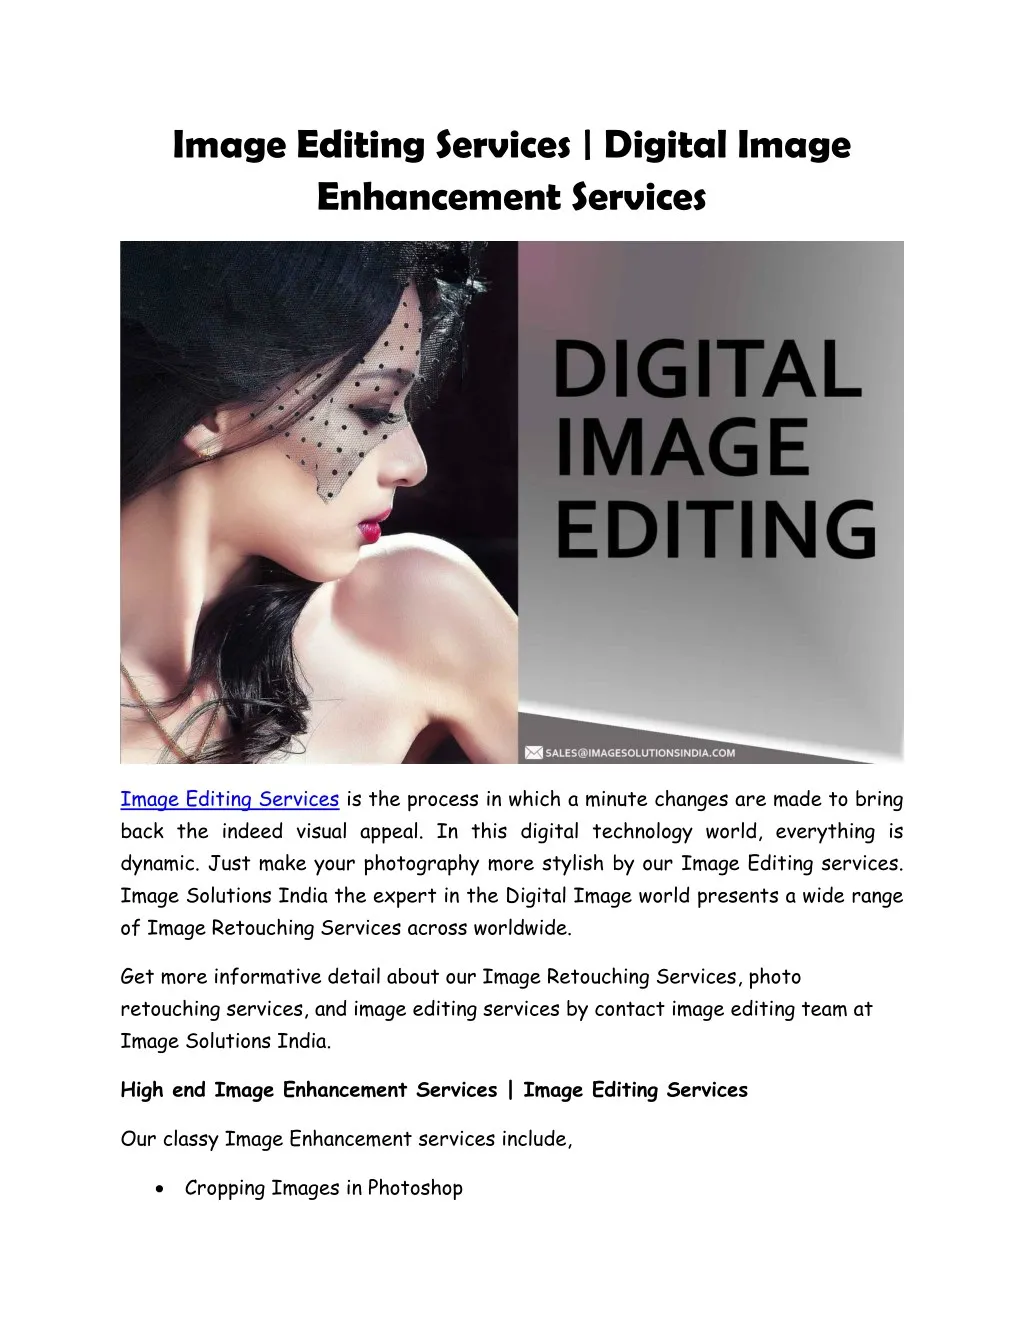 image editing services digital image enhancement